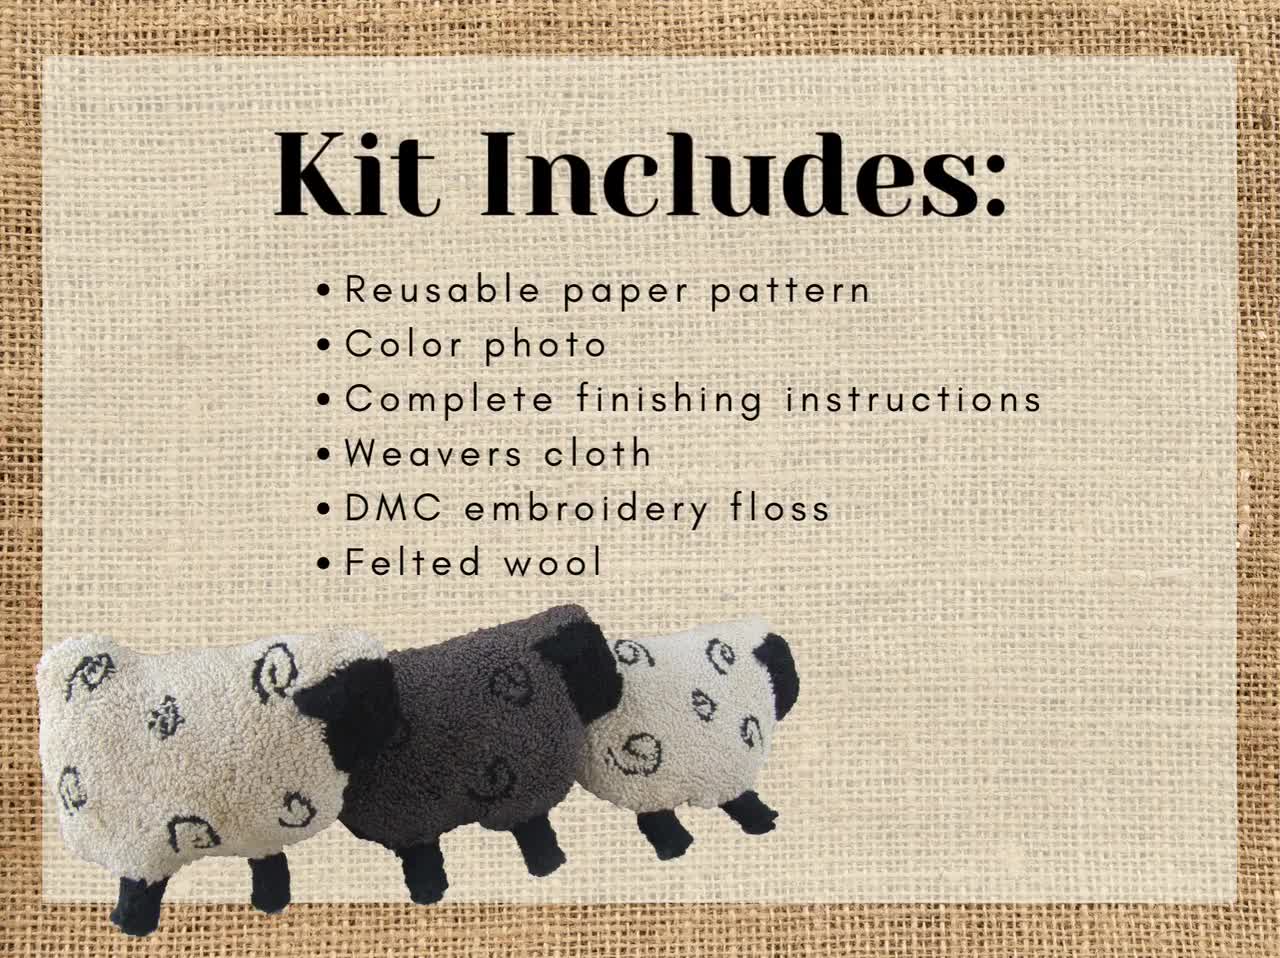 Round Sheep Punch Needle Embroidery Kit - Stitched Modern